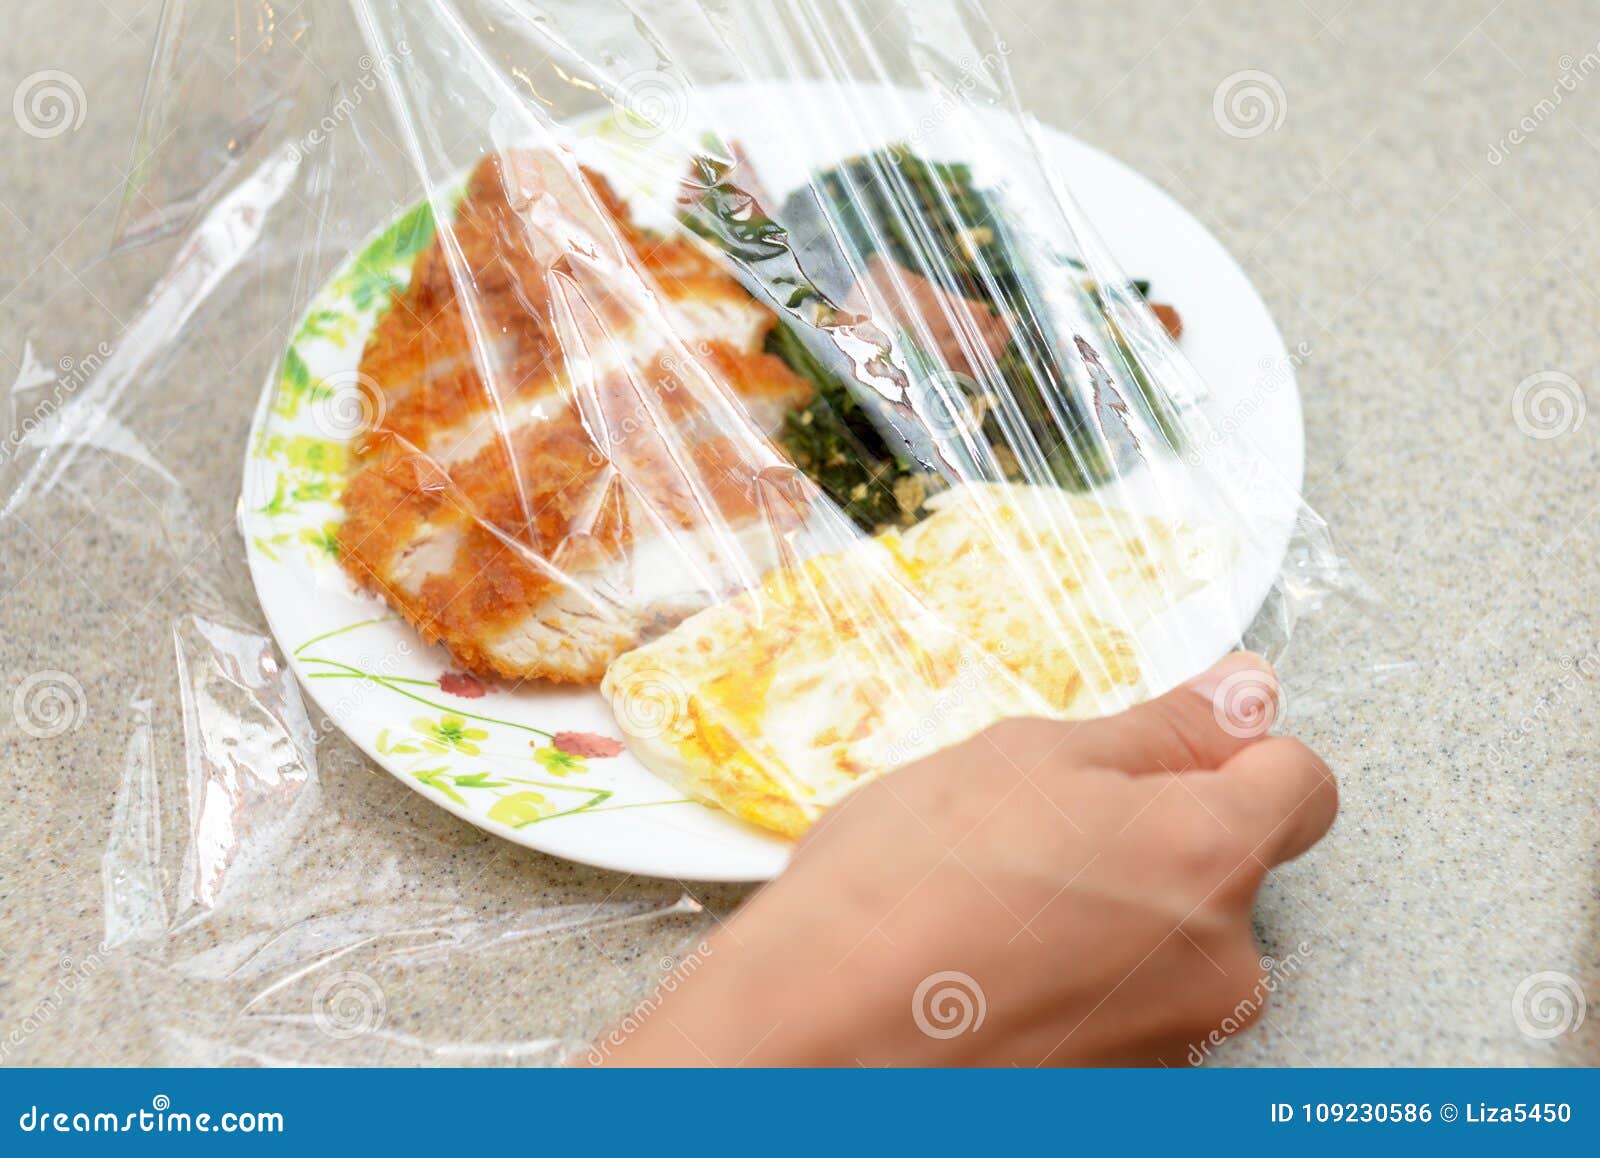 Alimenti Coperti Di Pellicola Trasparente Fotografia Stock - Immagine di  giapponese, mangi: 109230586